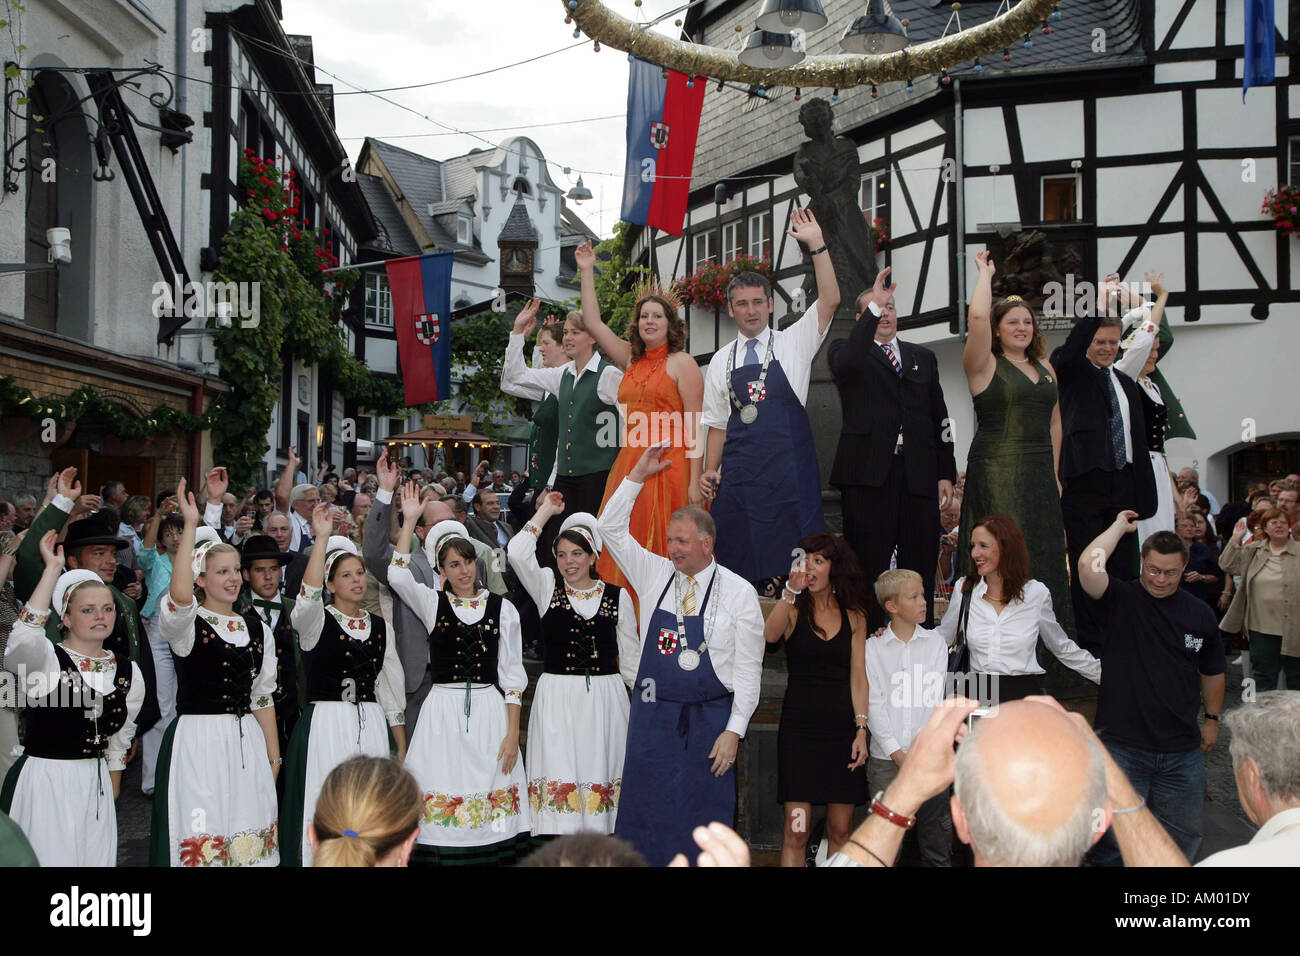 Opening of the eldest german wine festival, Winningen, Rhineland-Palatinate Germany Stock Photo